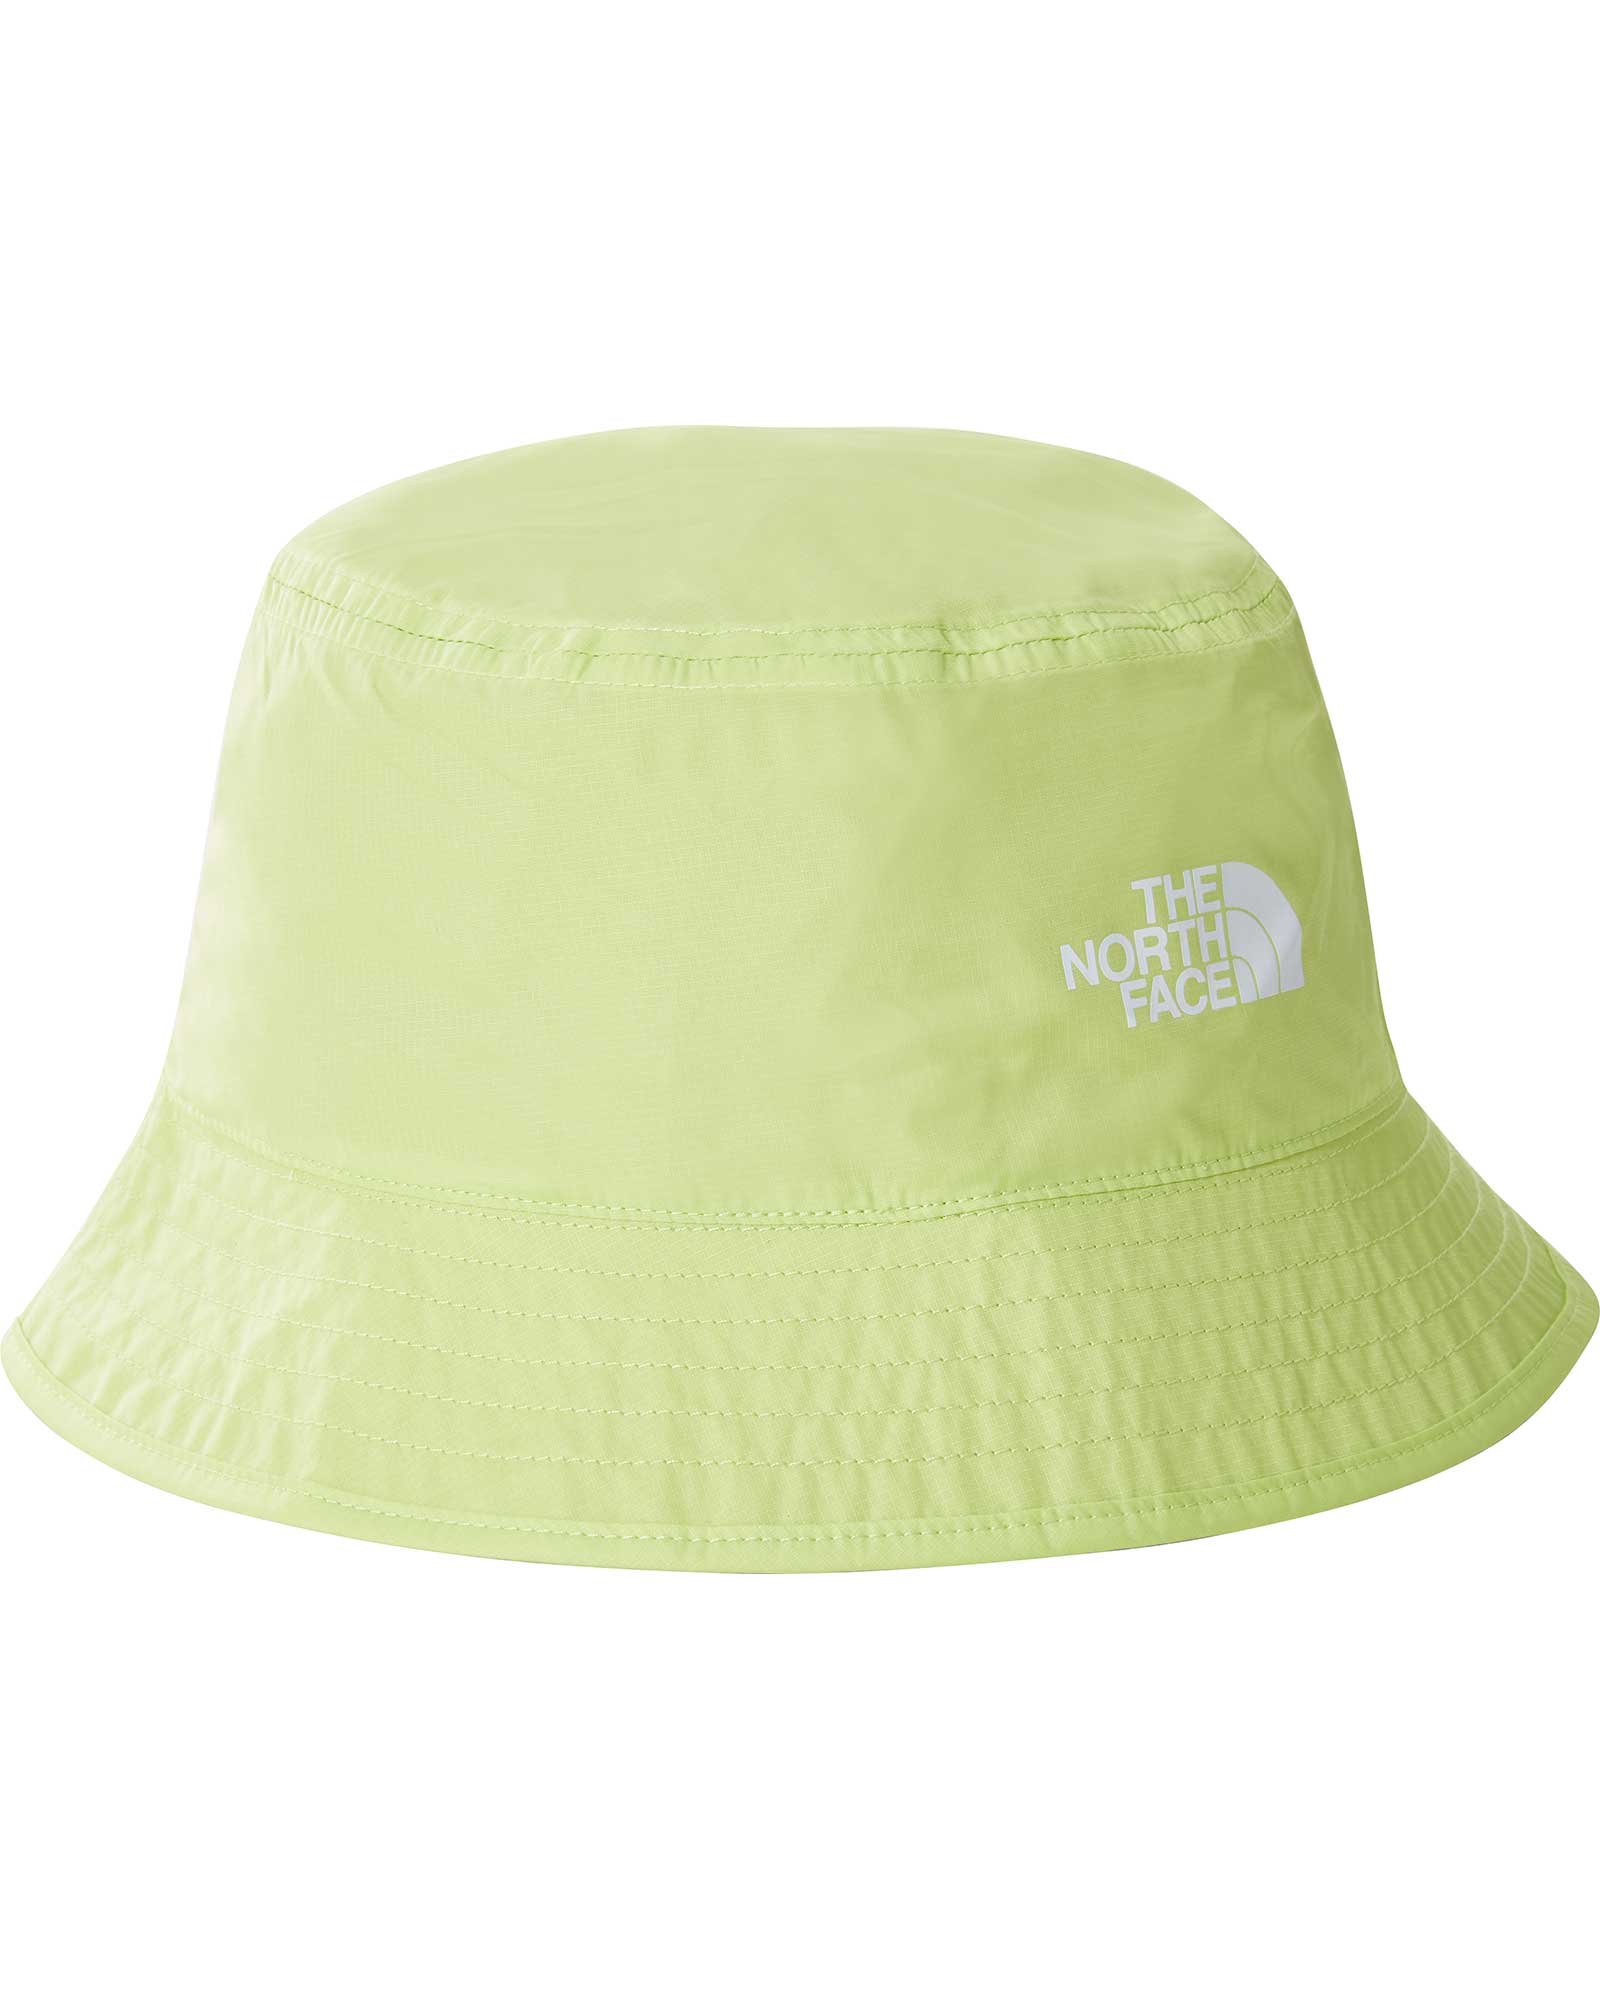 The North Face Sun Stash Bucket Hat - Sharp Green S/M